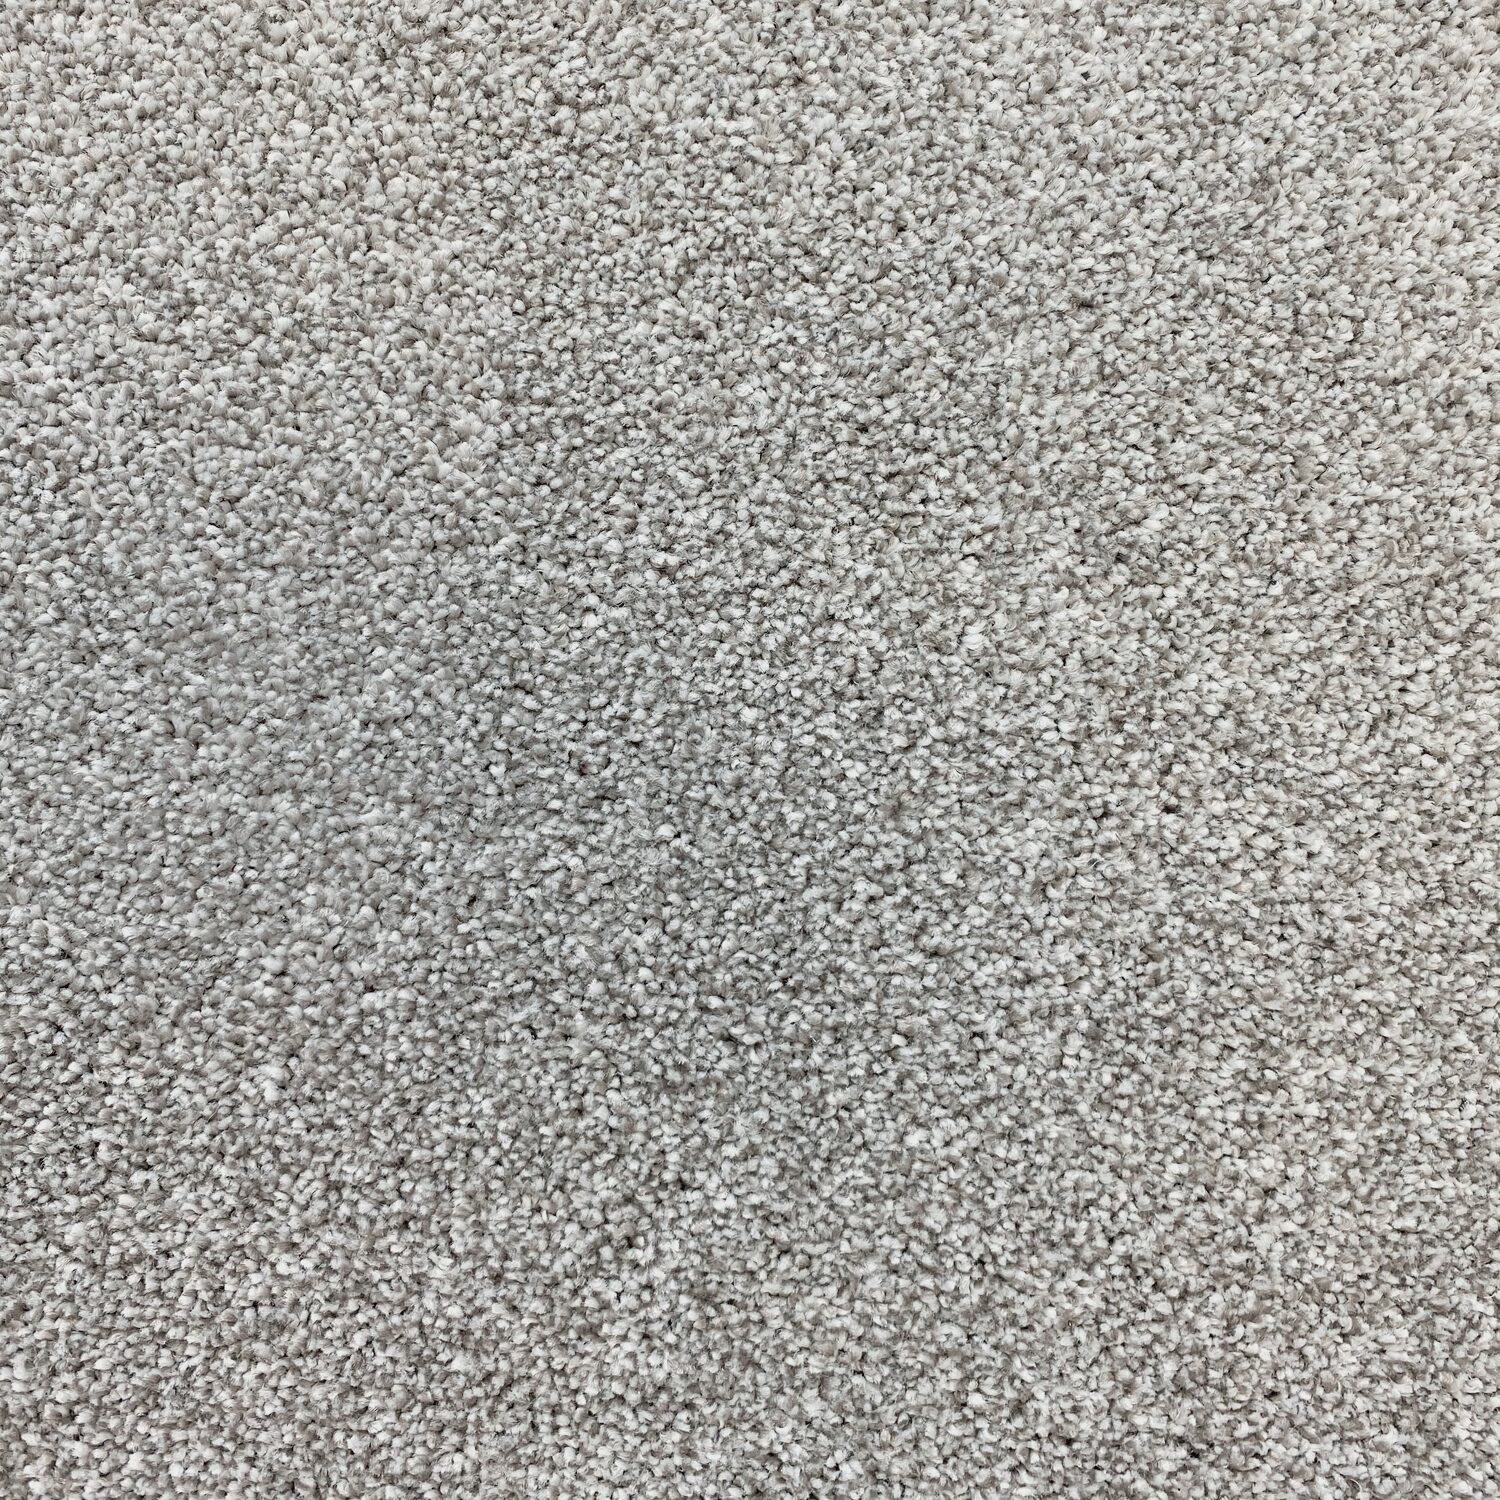 Carpet name: Smart Textures Crystal